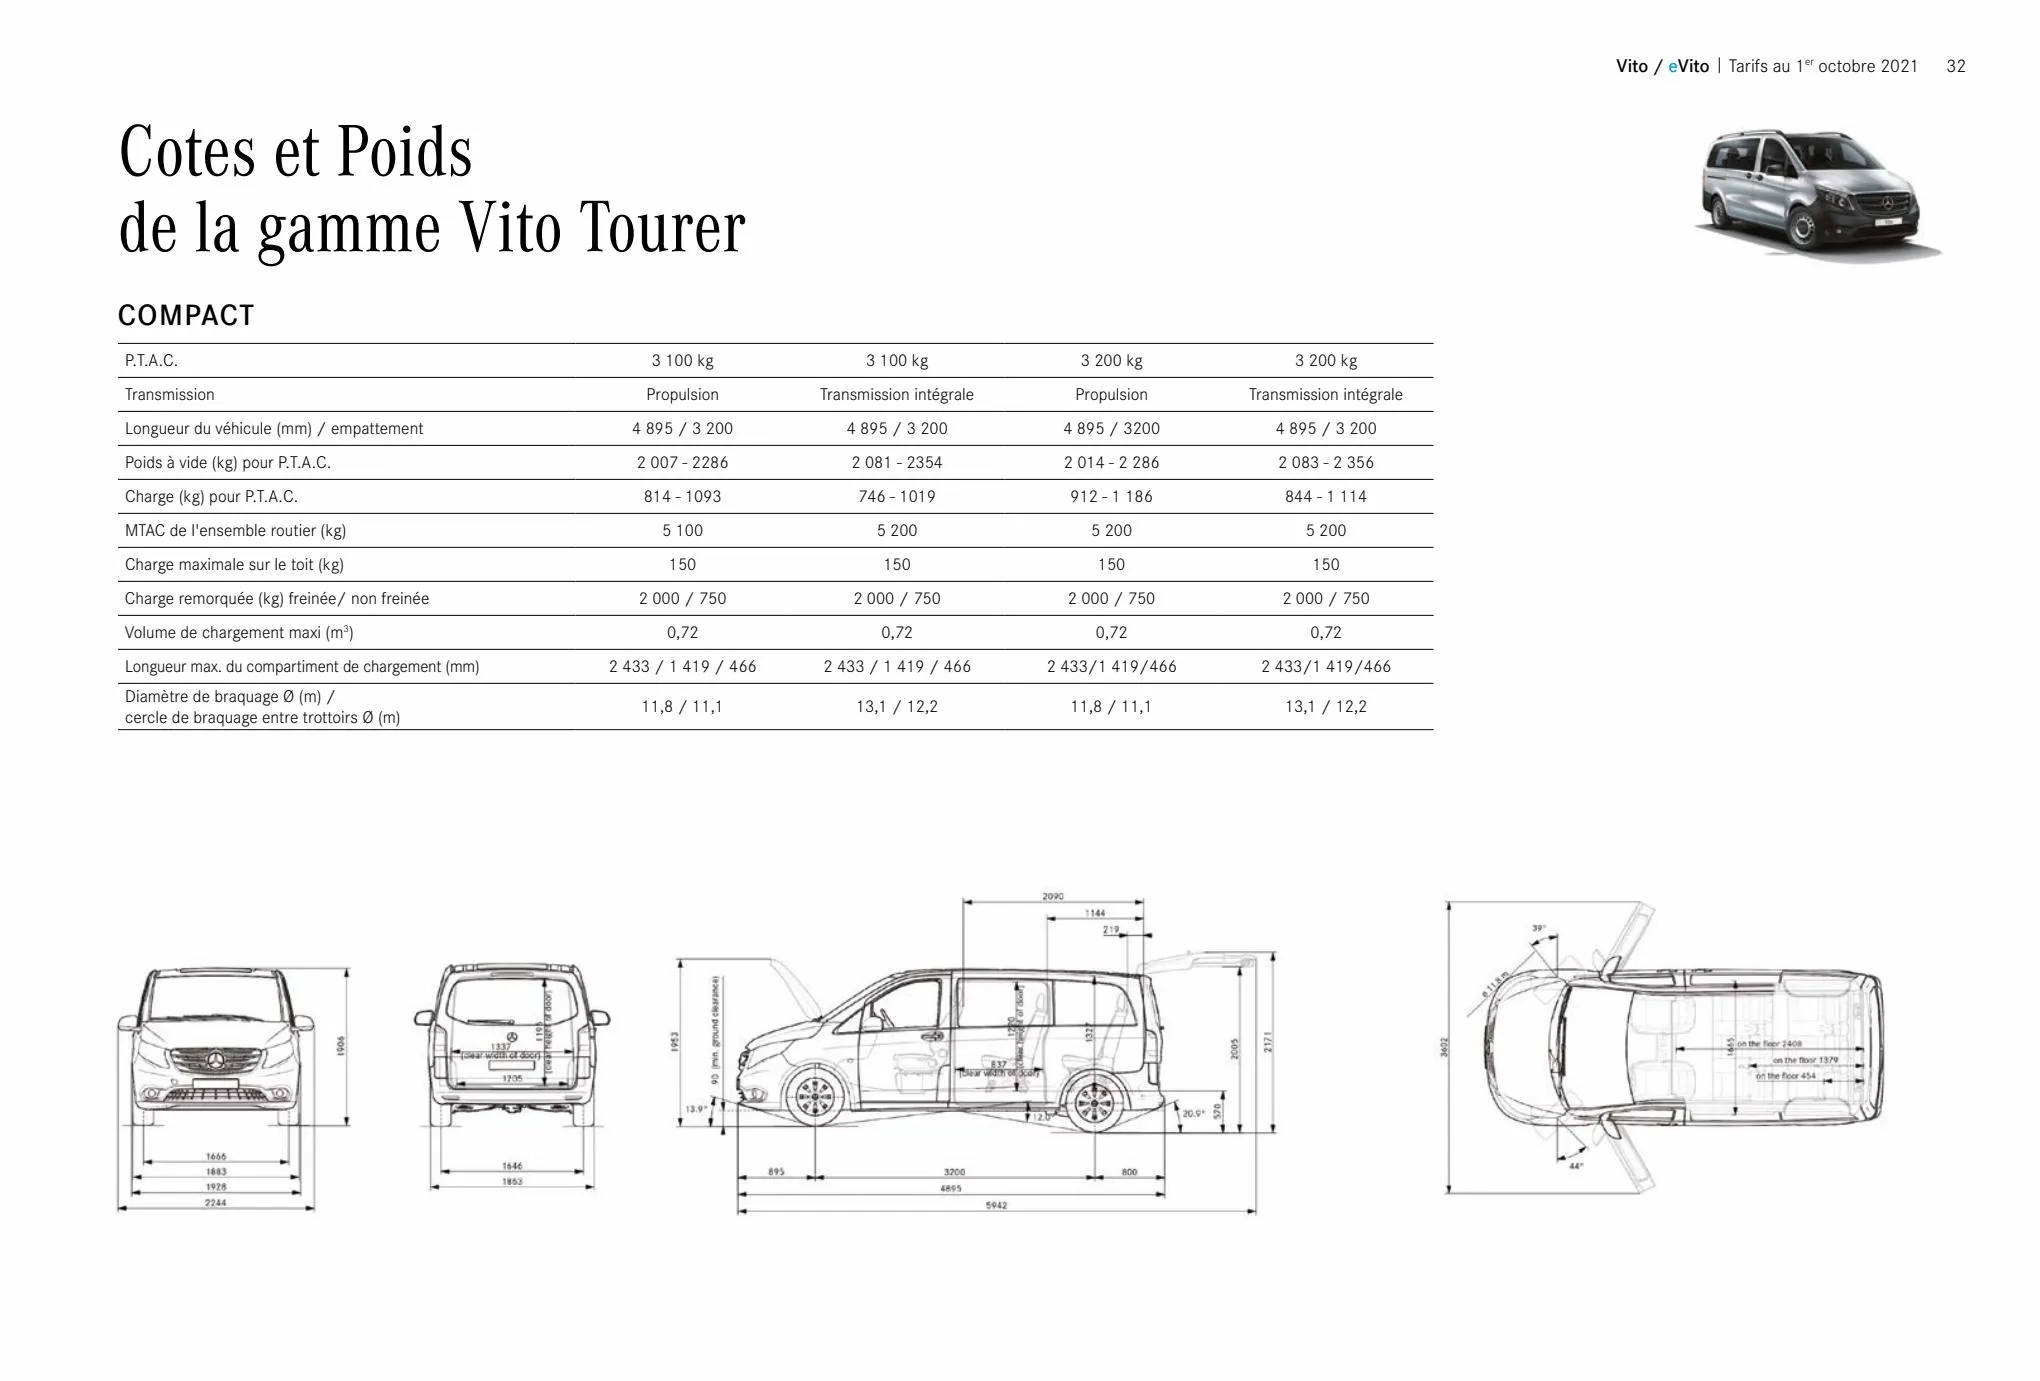 Catalogue Tarifs et brochures Vito/eVito, page 00032